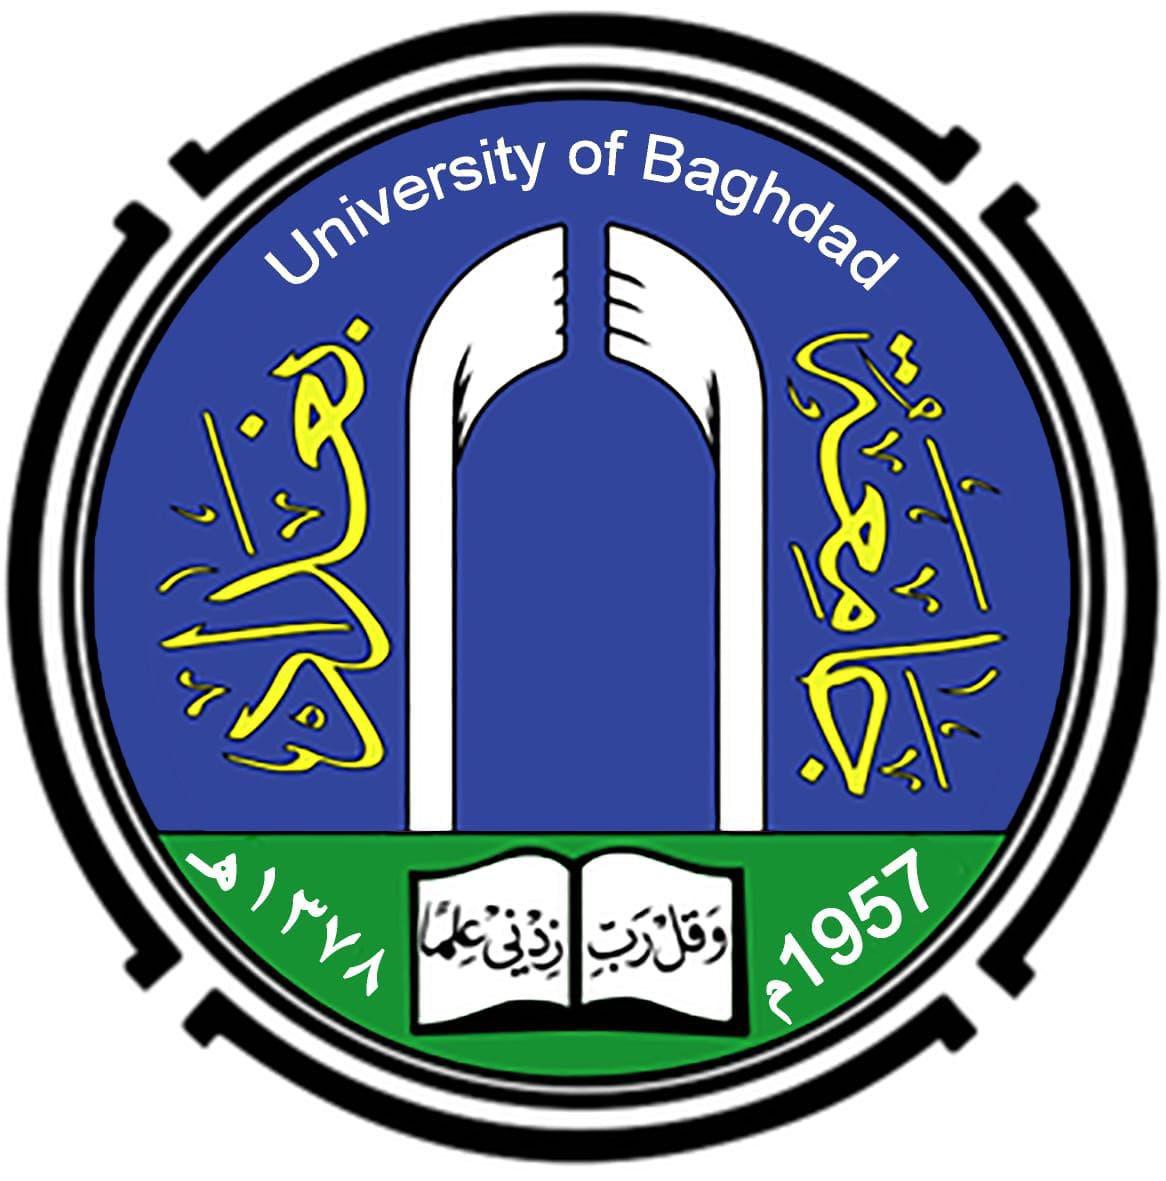 University of Baghdad logo latest version